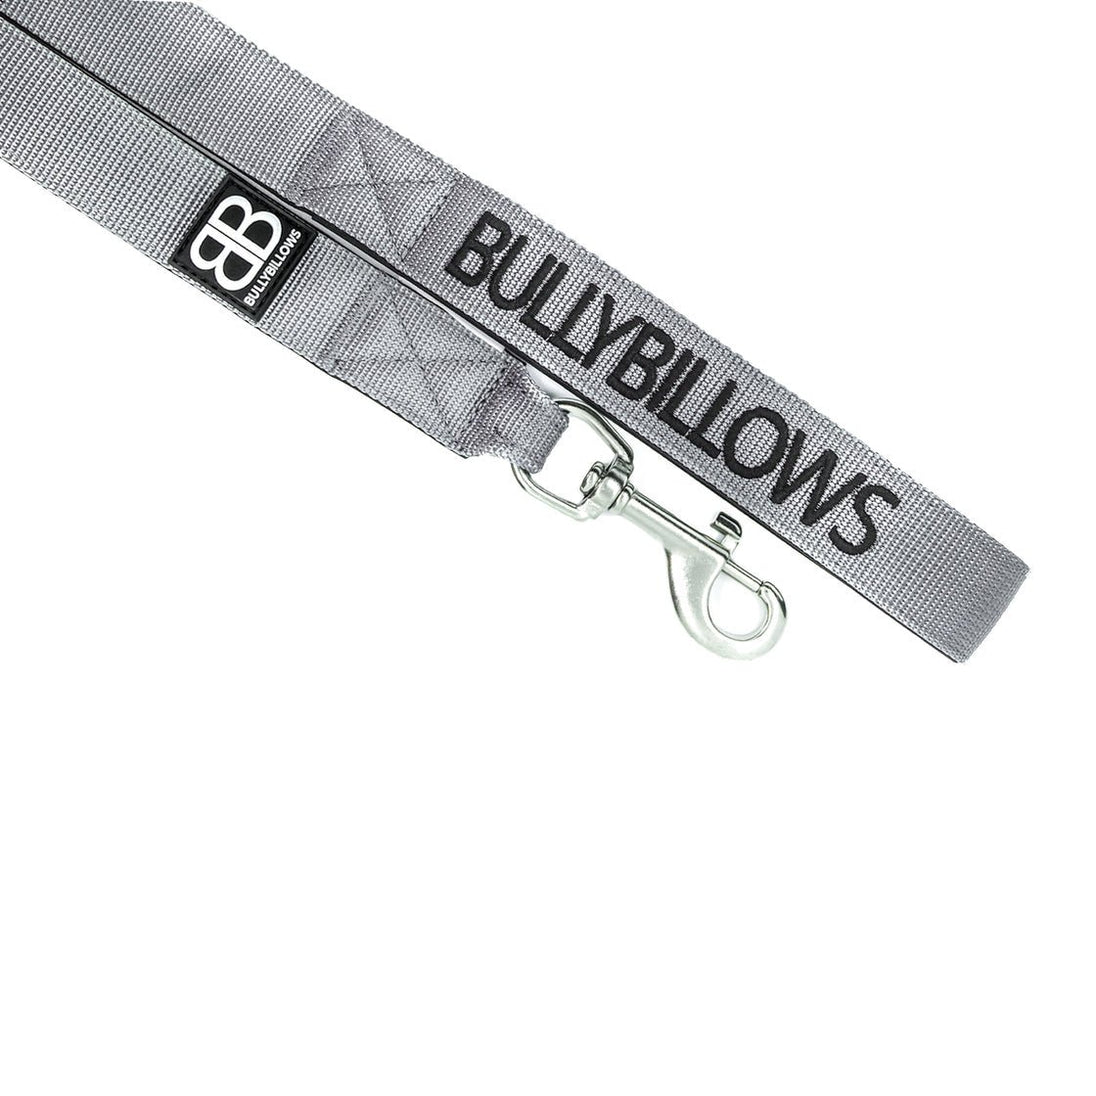 Bully Billows - Nylon Snap Hook Dog Lead - Indestructibone Gray - Bulletproof Pet Products Inc